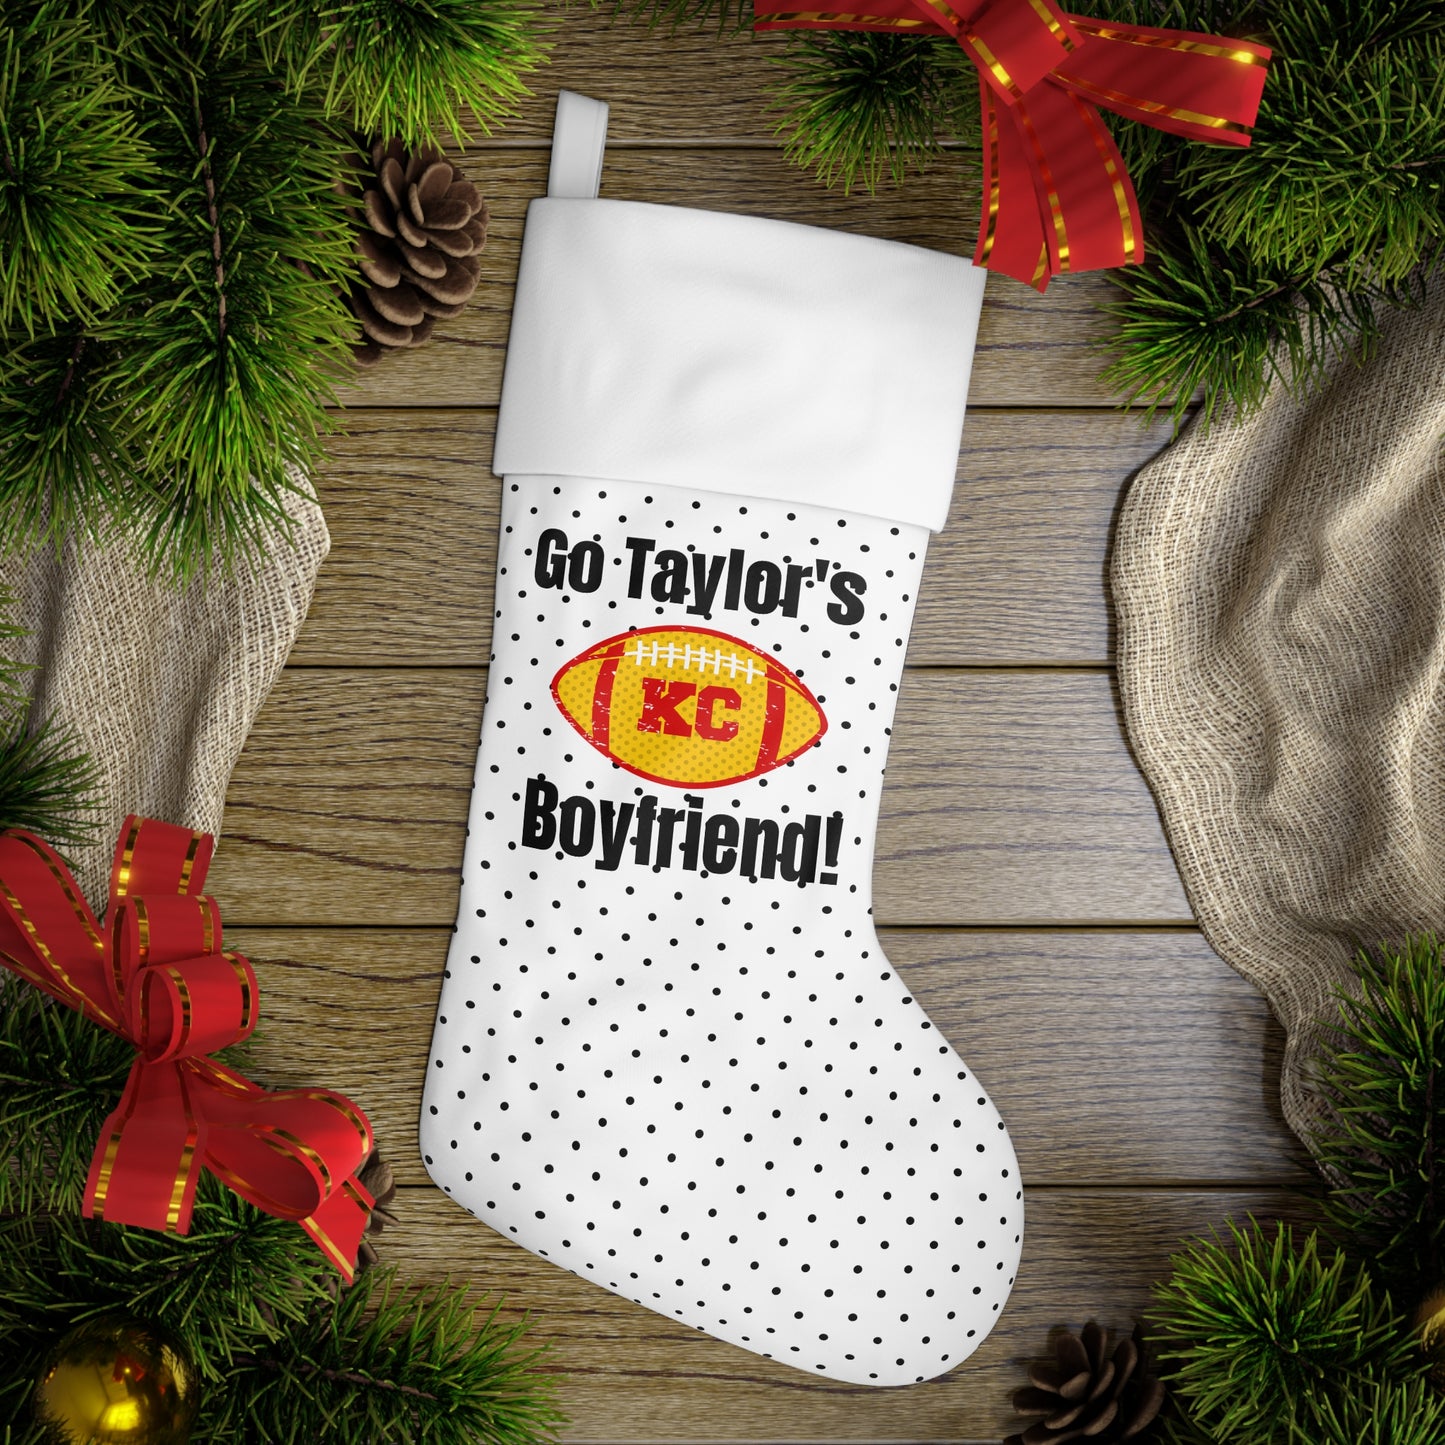 Go Taylor's Boyfriend Football Holiday Stocking - White/Black Polka Dot